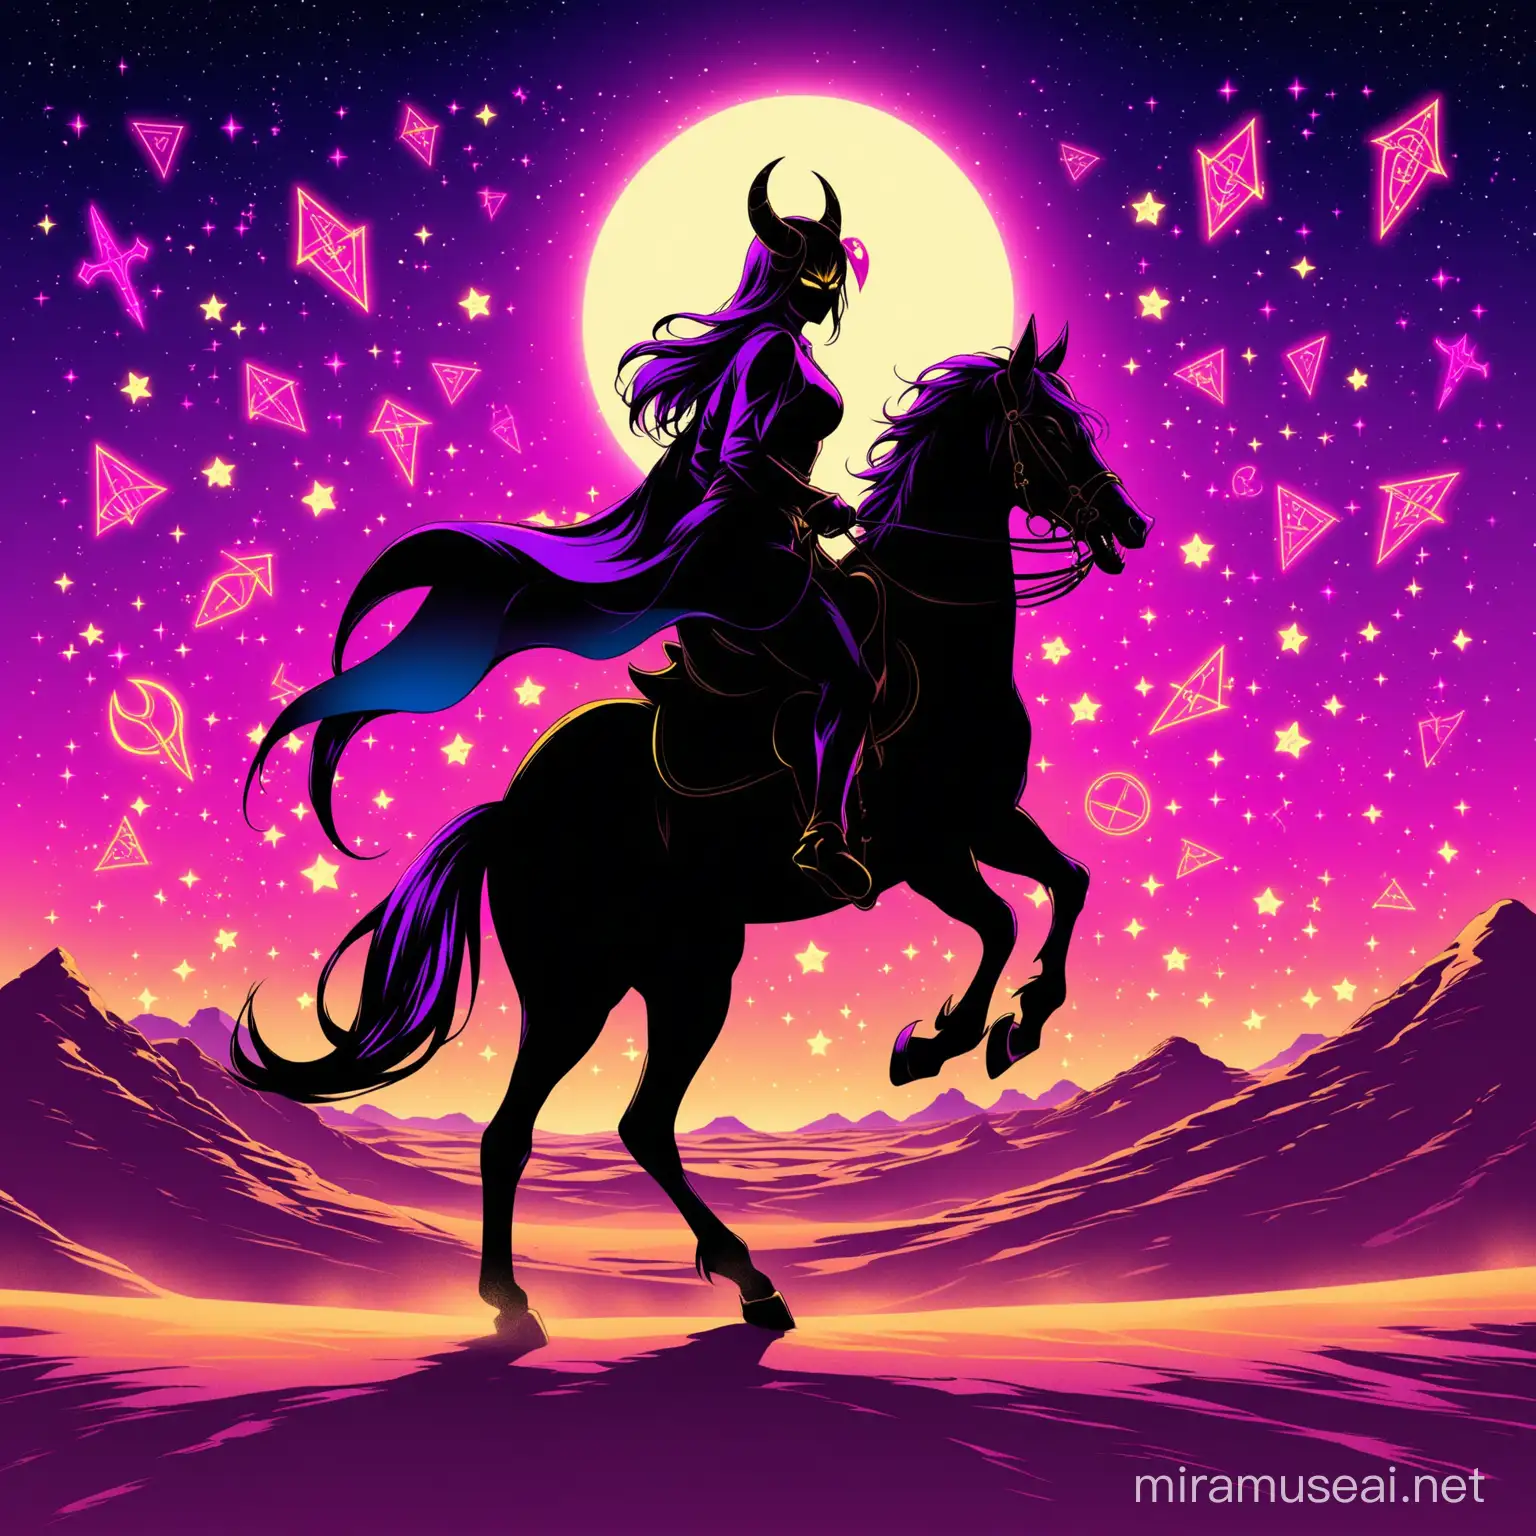 Dark Devil Riding a Horse Silhouetted Against Neon Desert Sky